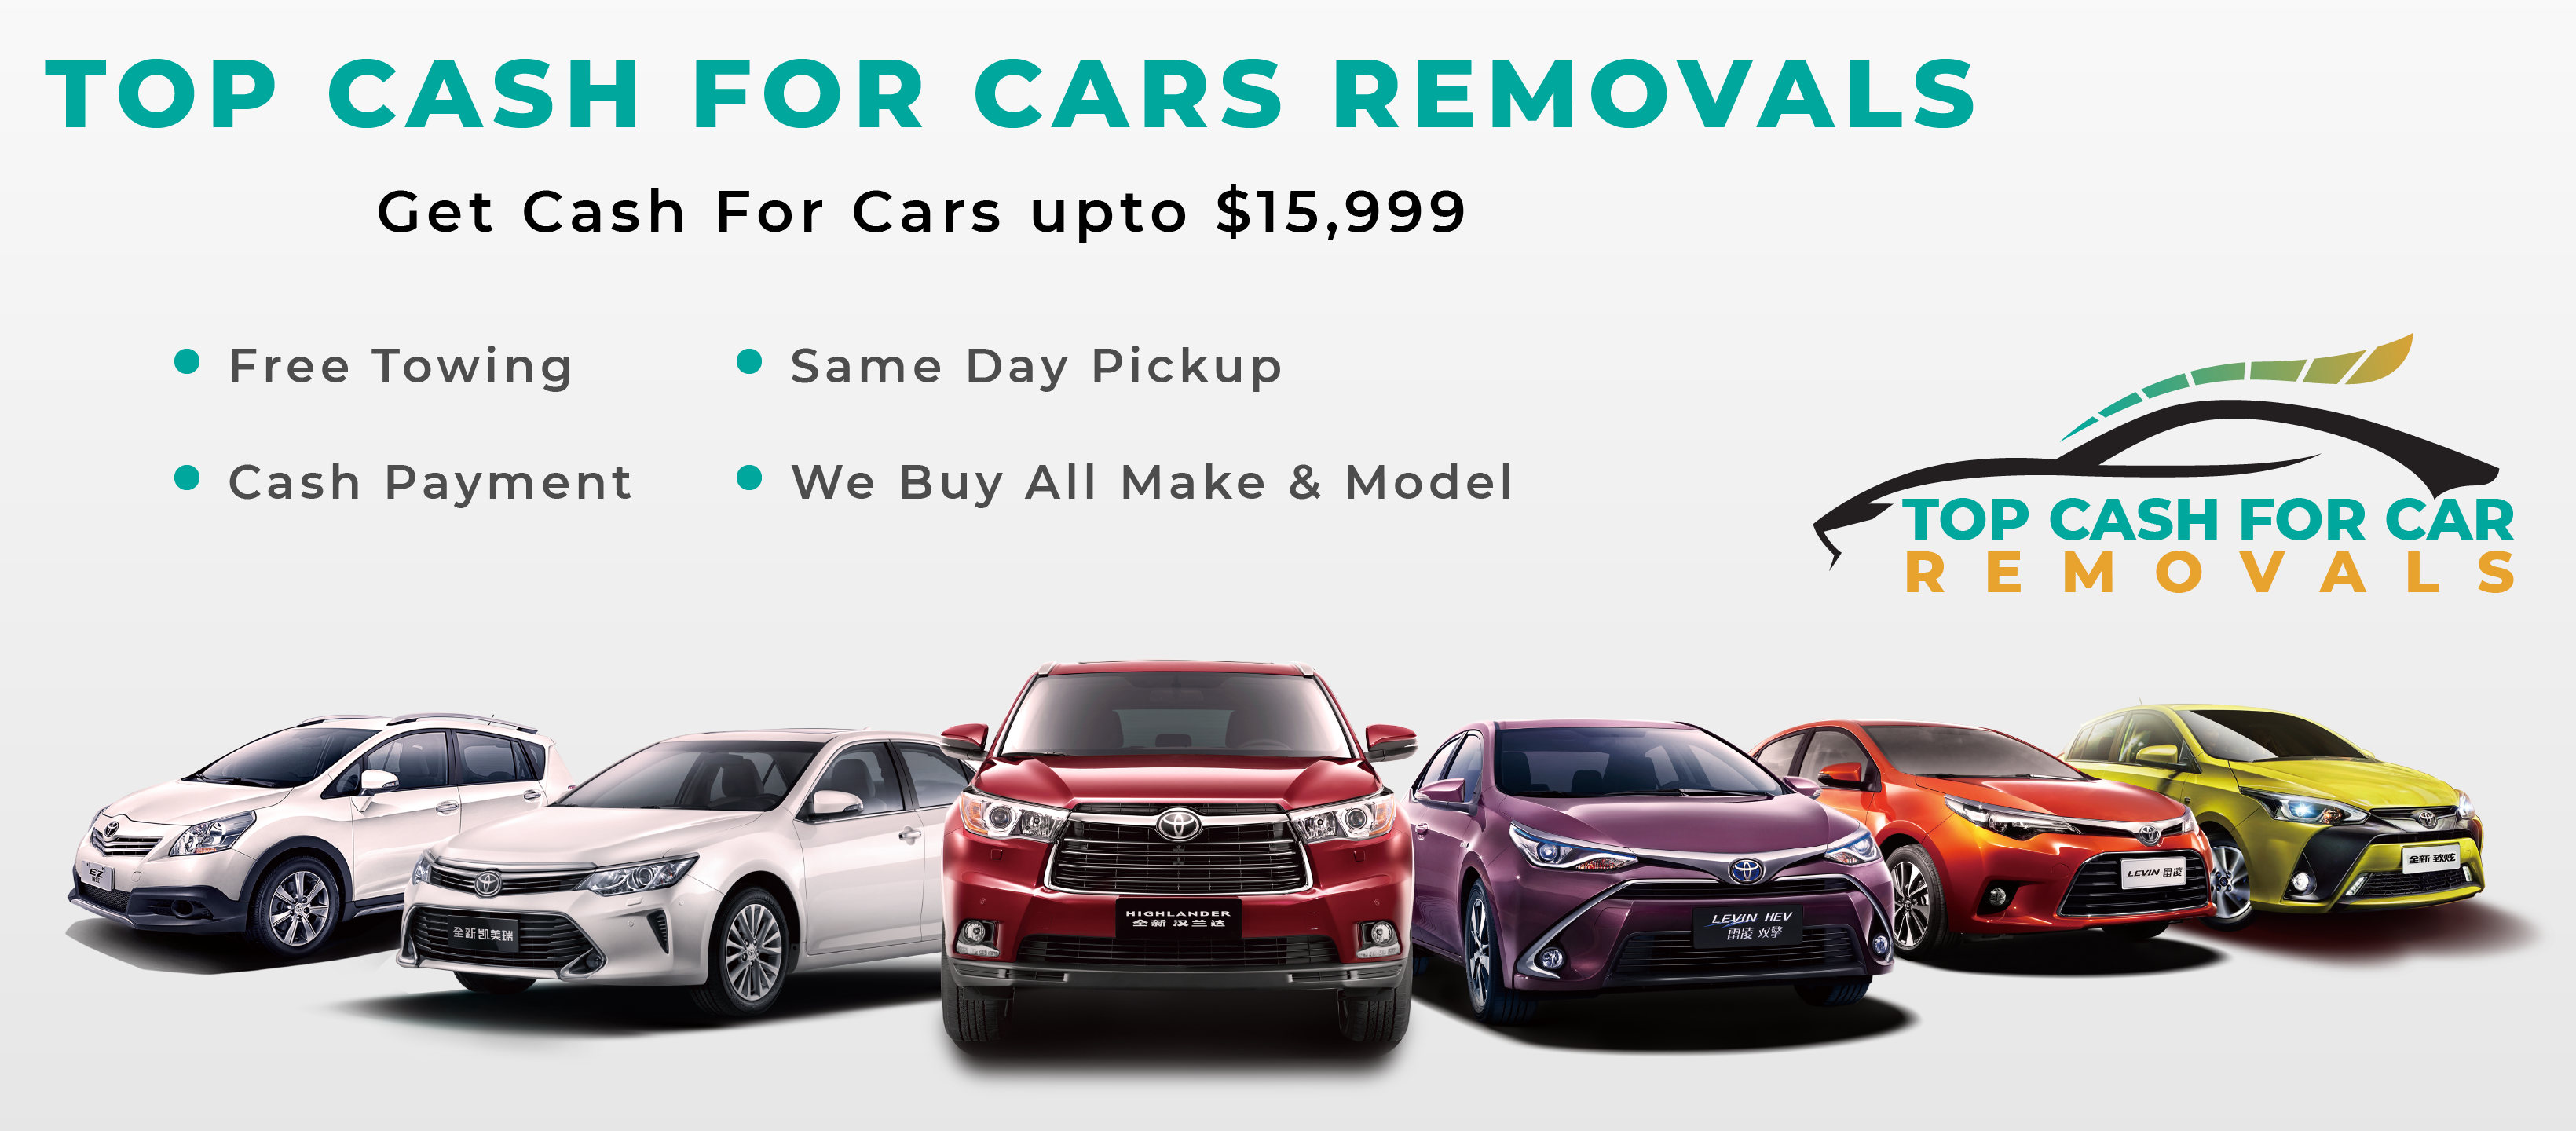 Images Top Cash For Car Removals